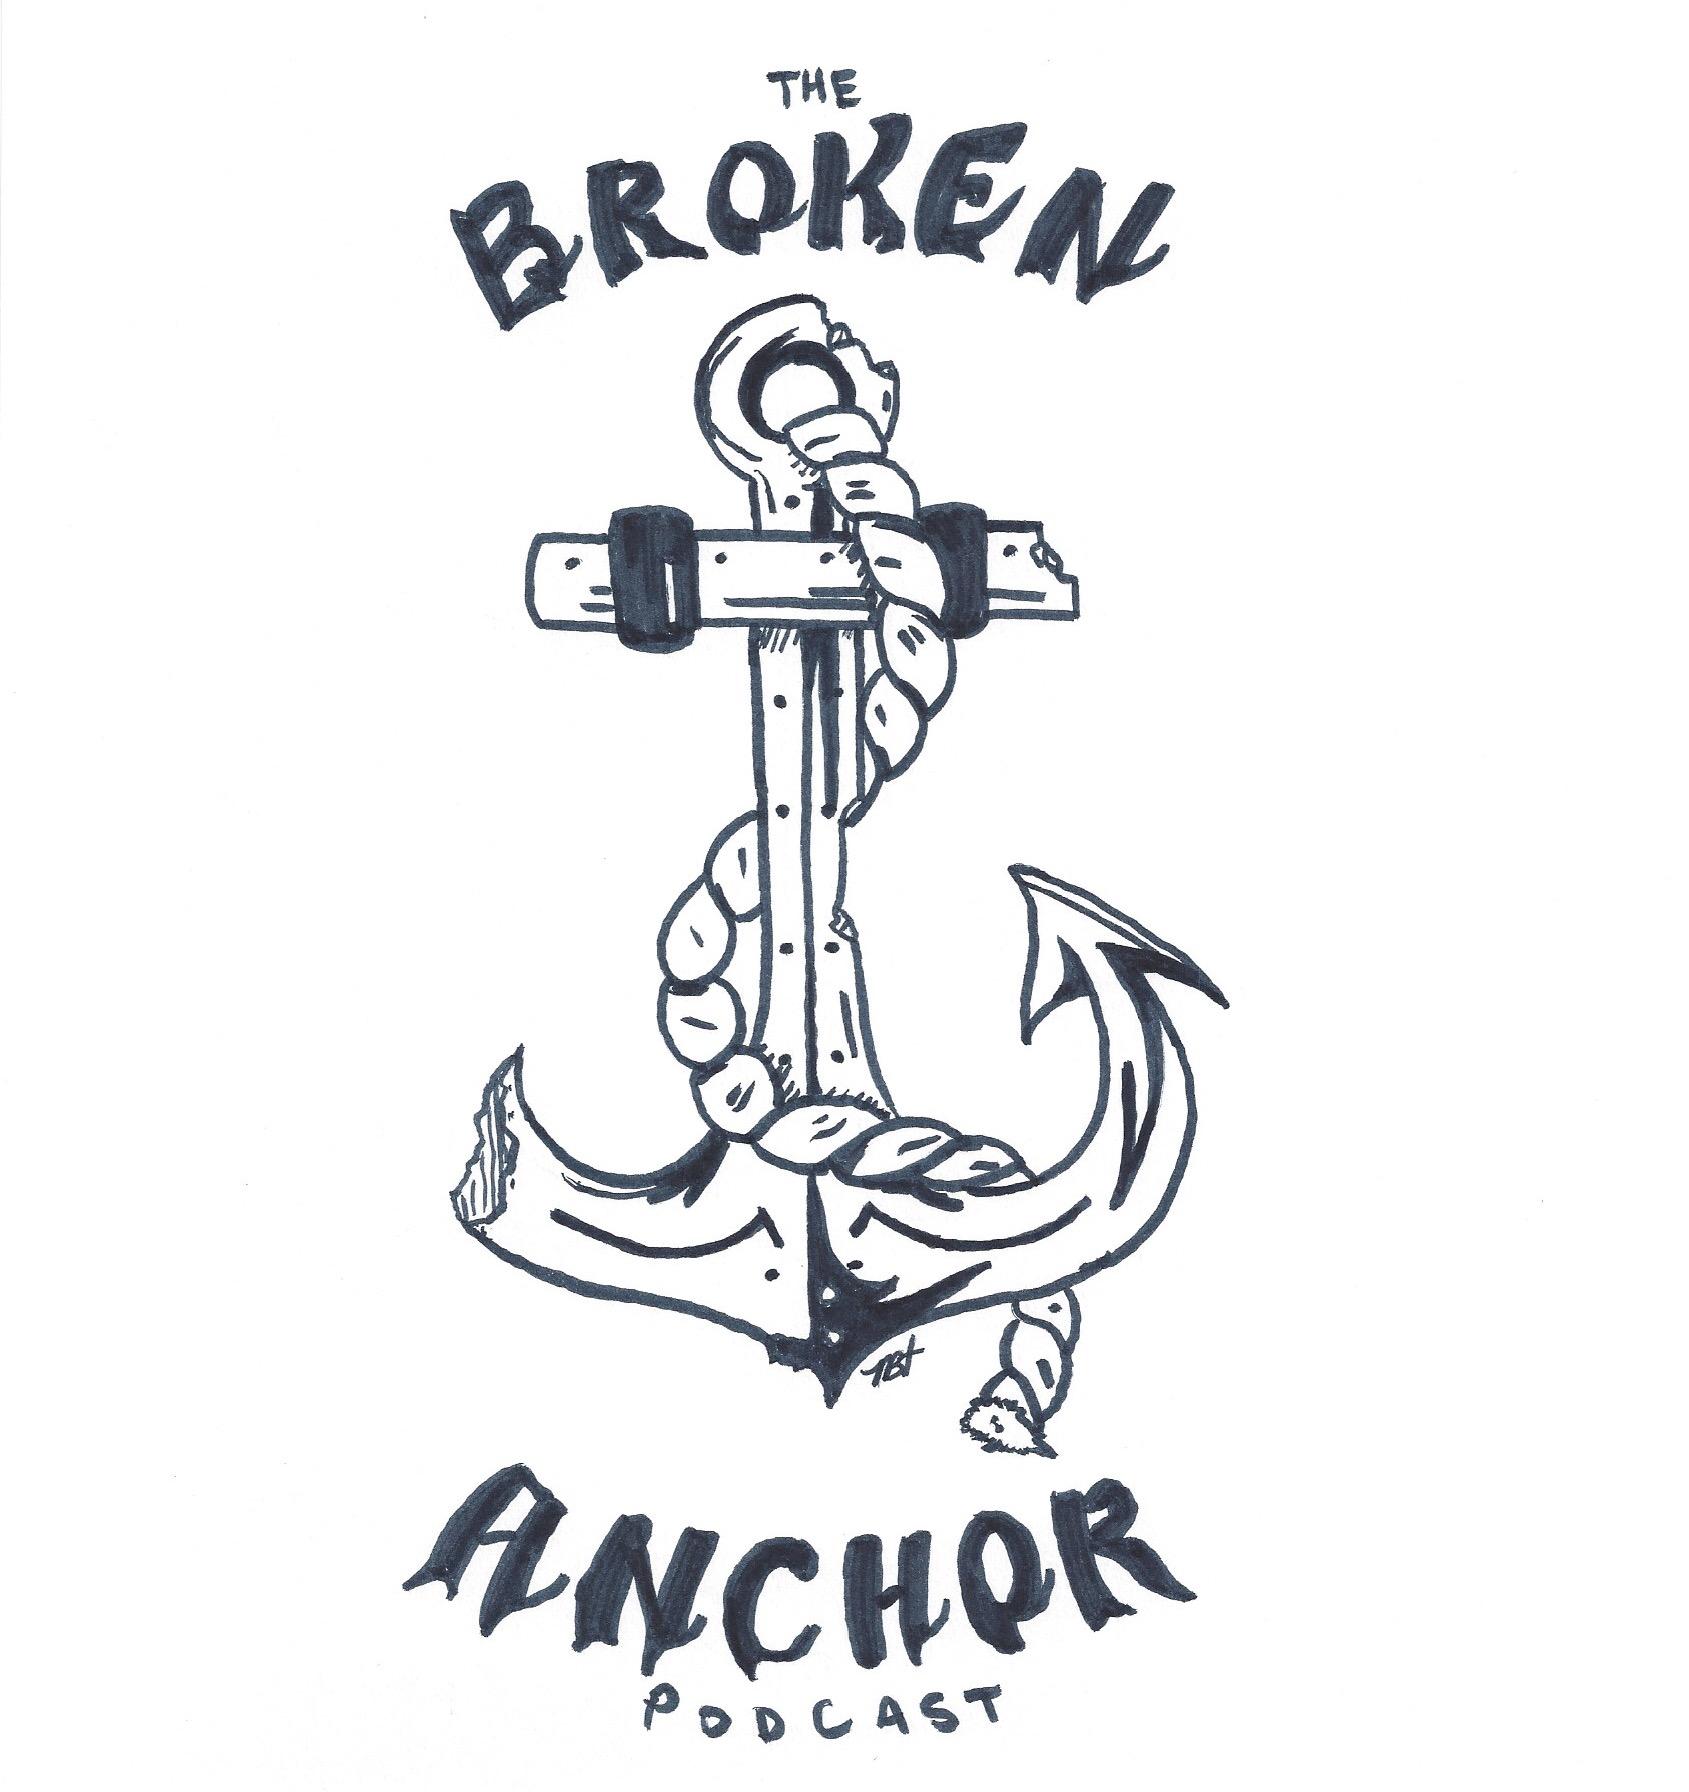 The Broken Anchor Podcast